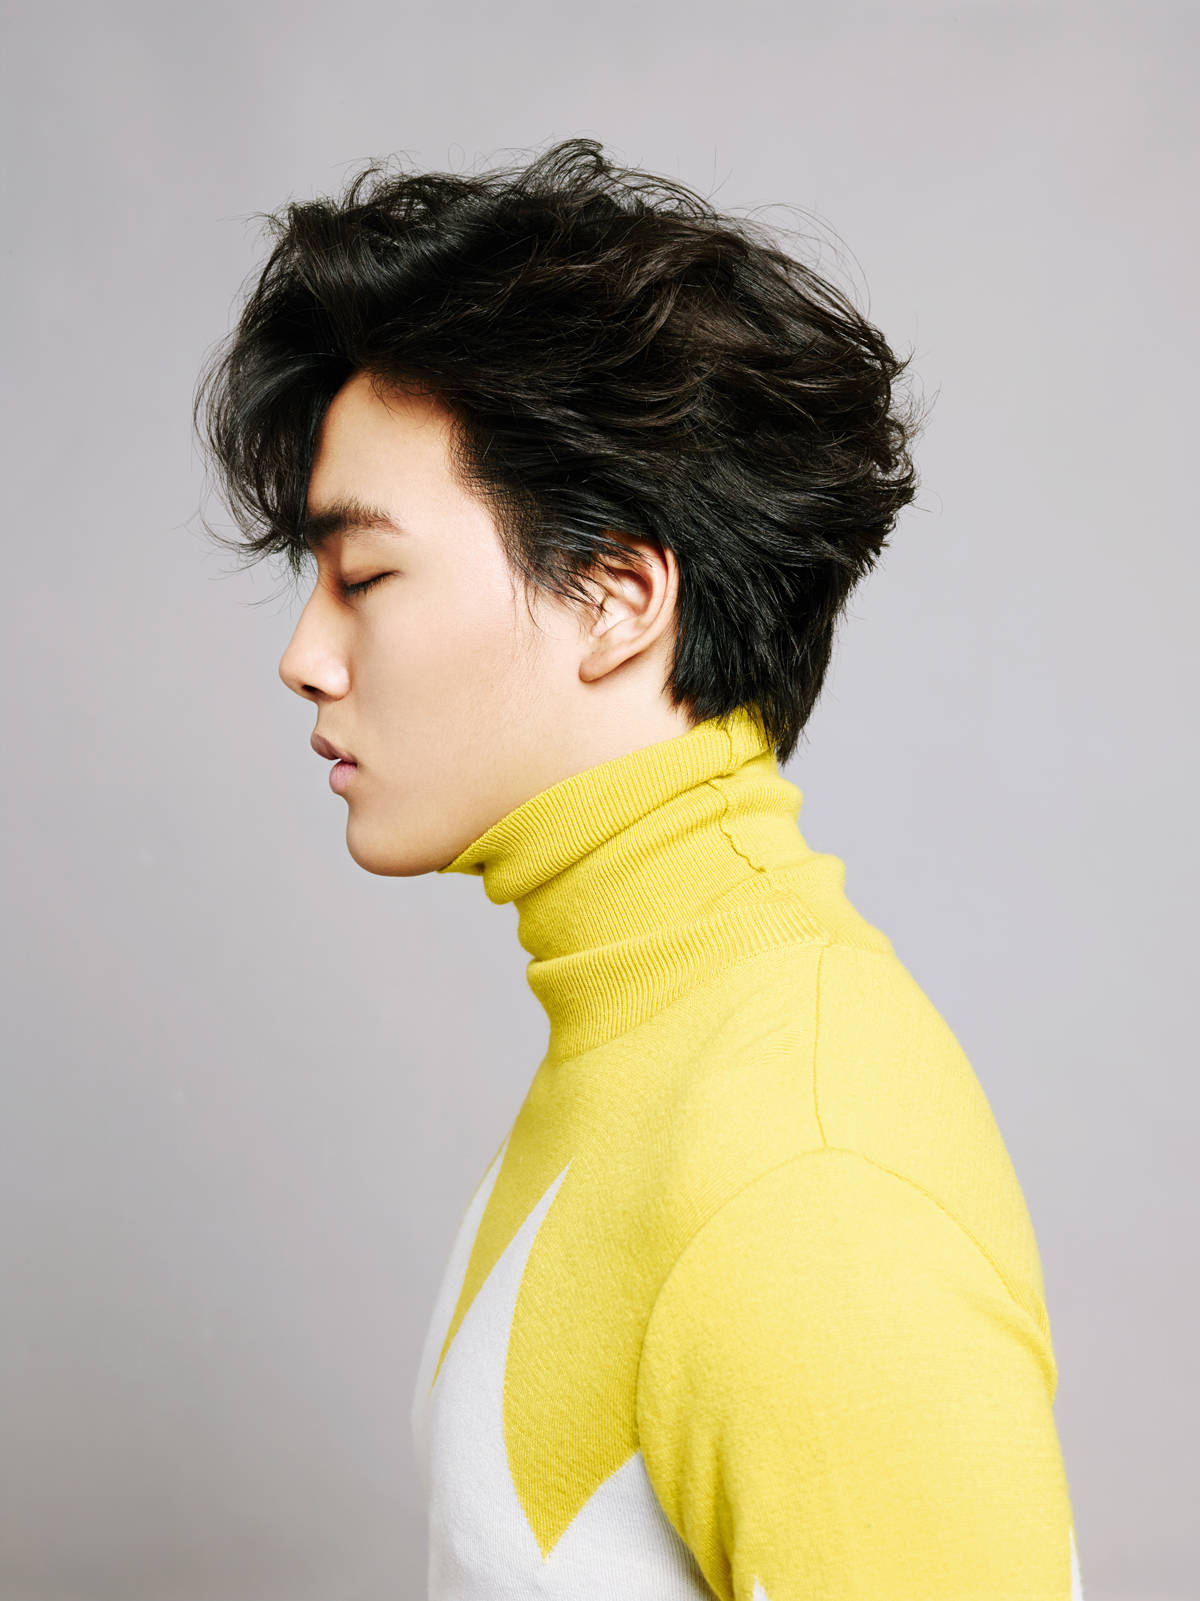 Yeo Jin Goo In Yellow Wallpaper